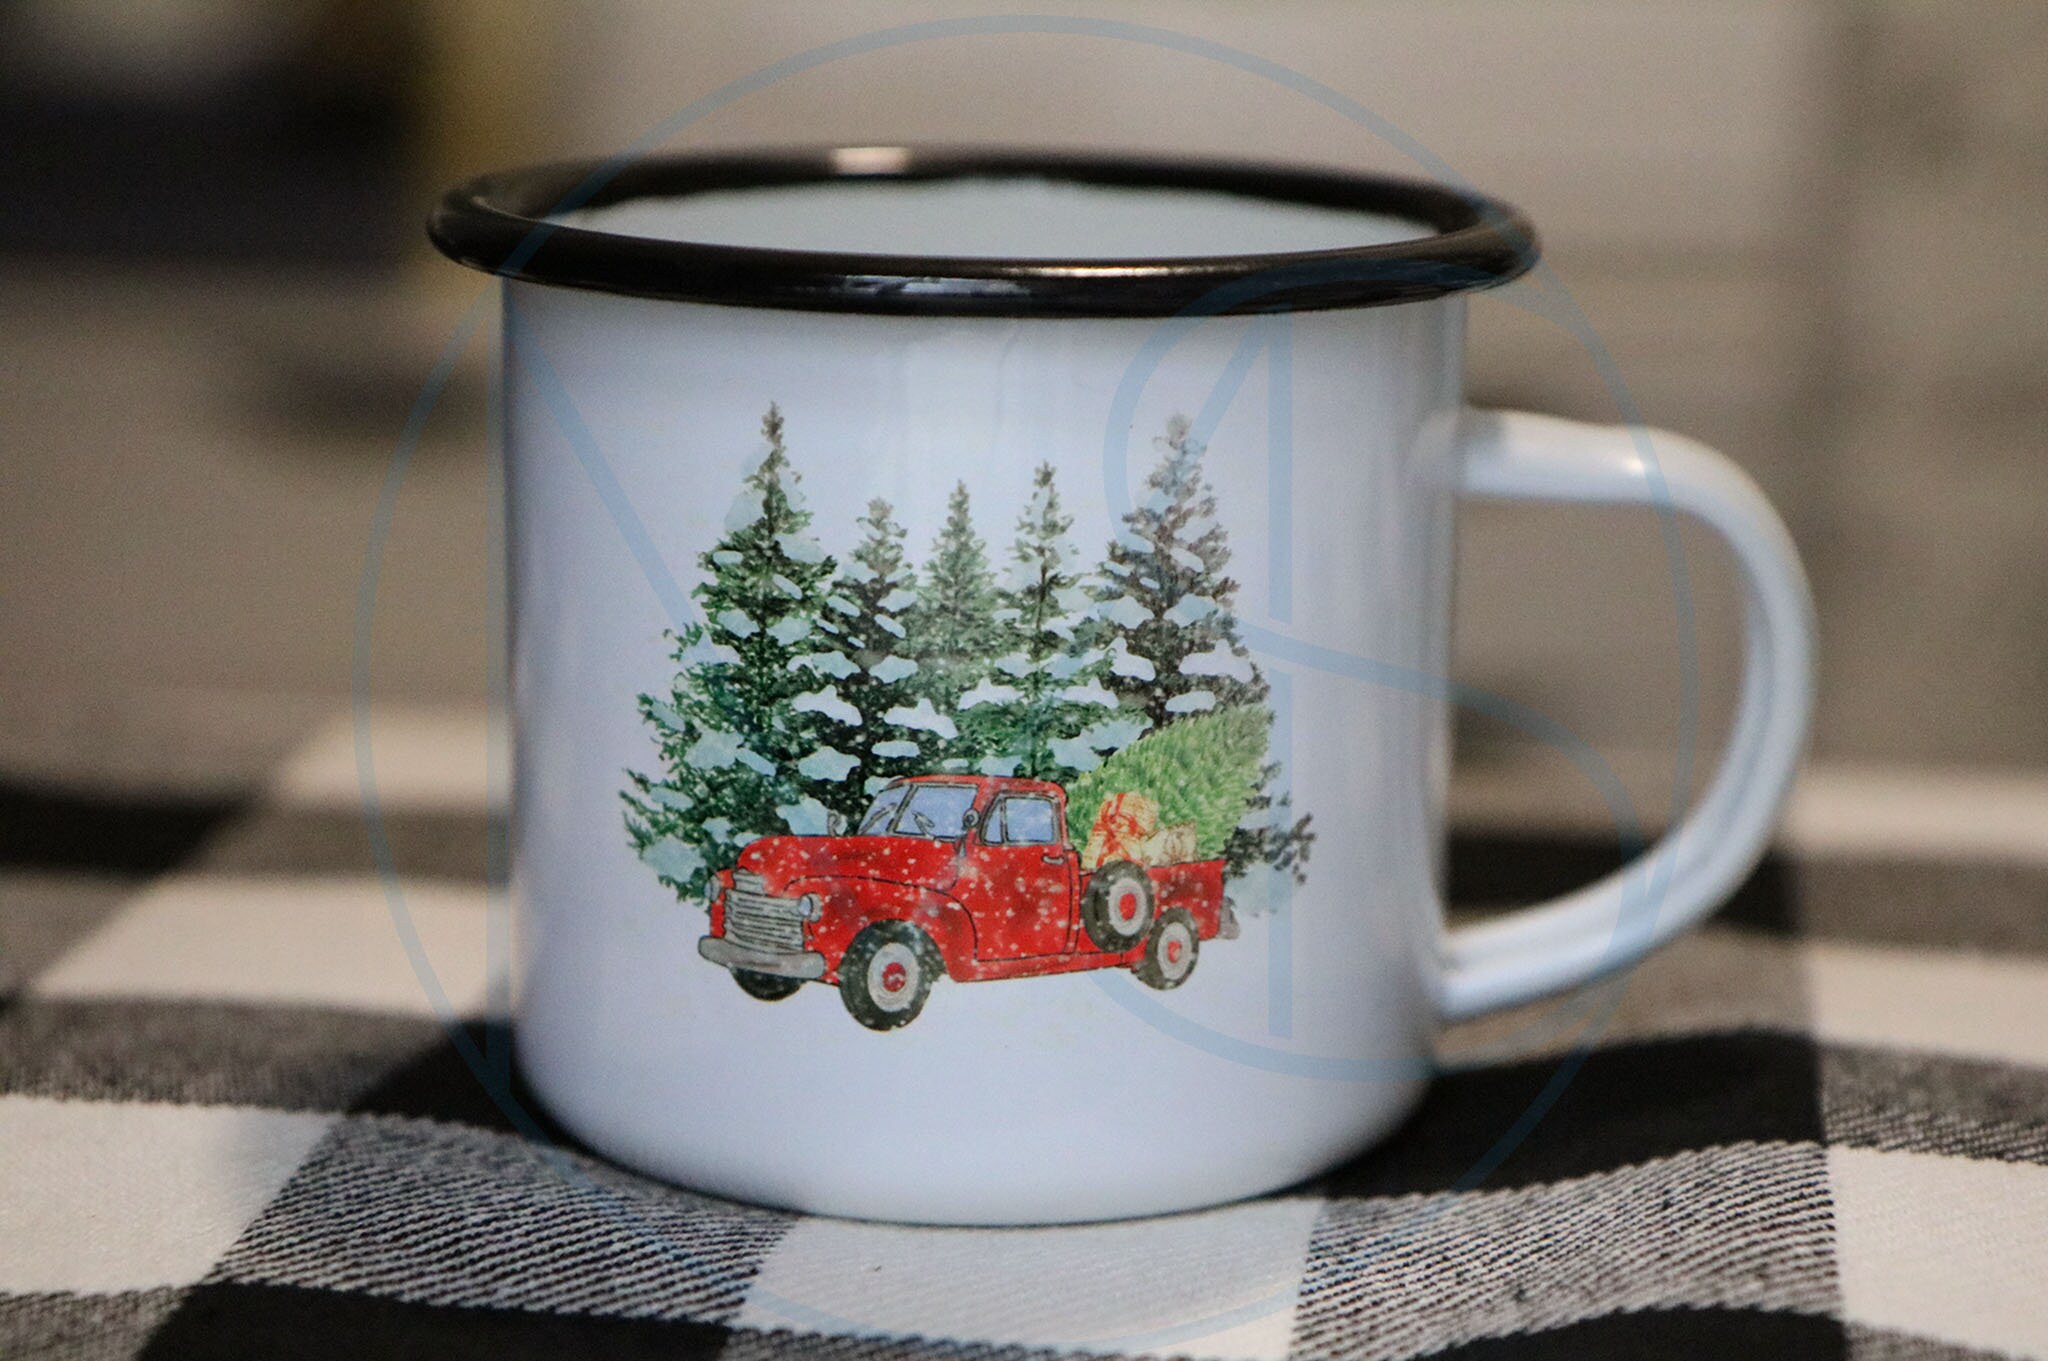 Uiifan12 Pcs Christmas Enamel Coffee Mugs Bulk 12 oz Hot Winter Holiday  Galvanized Steel Fall Coffee…See more Uiifan12 Pcs Christmas Enamel Coffee